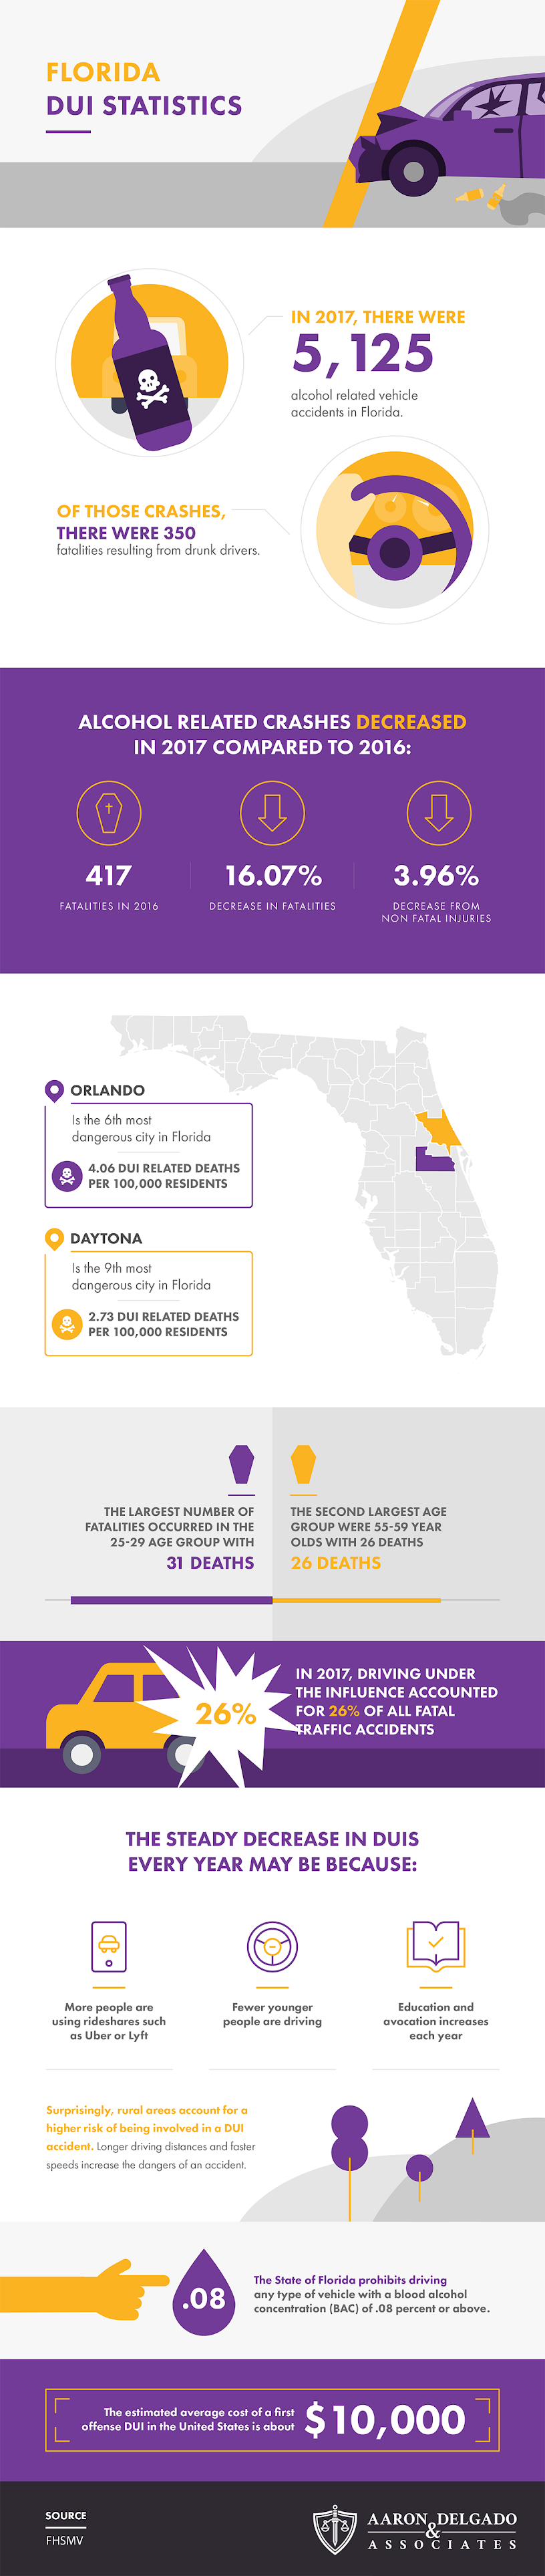 Florida DUI Statistics #infographic